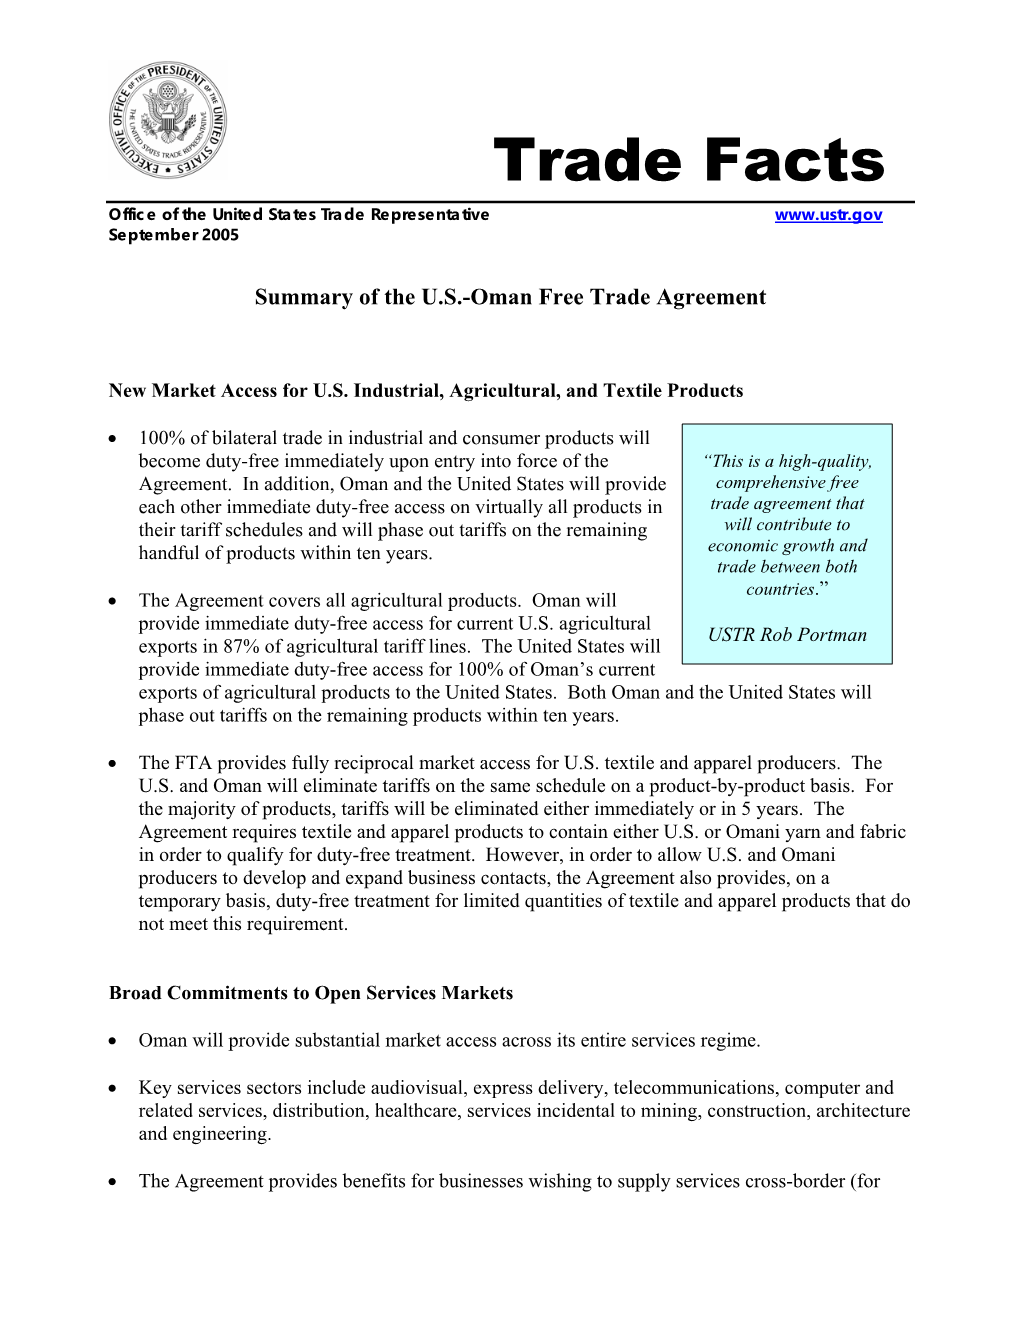 Summary of the U.S.-Oman Free Trade Agreement